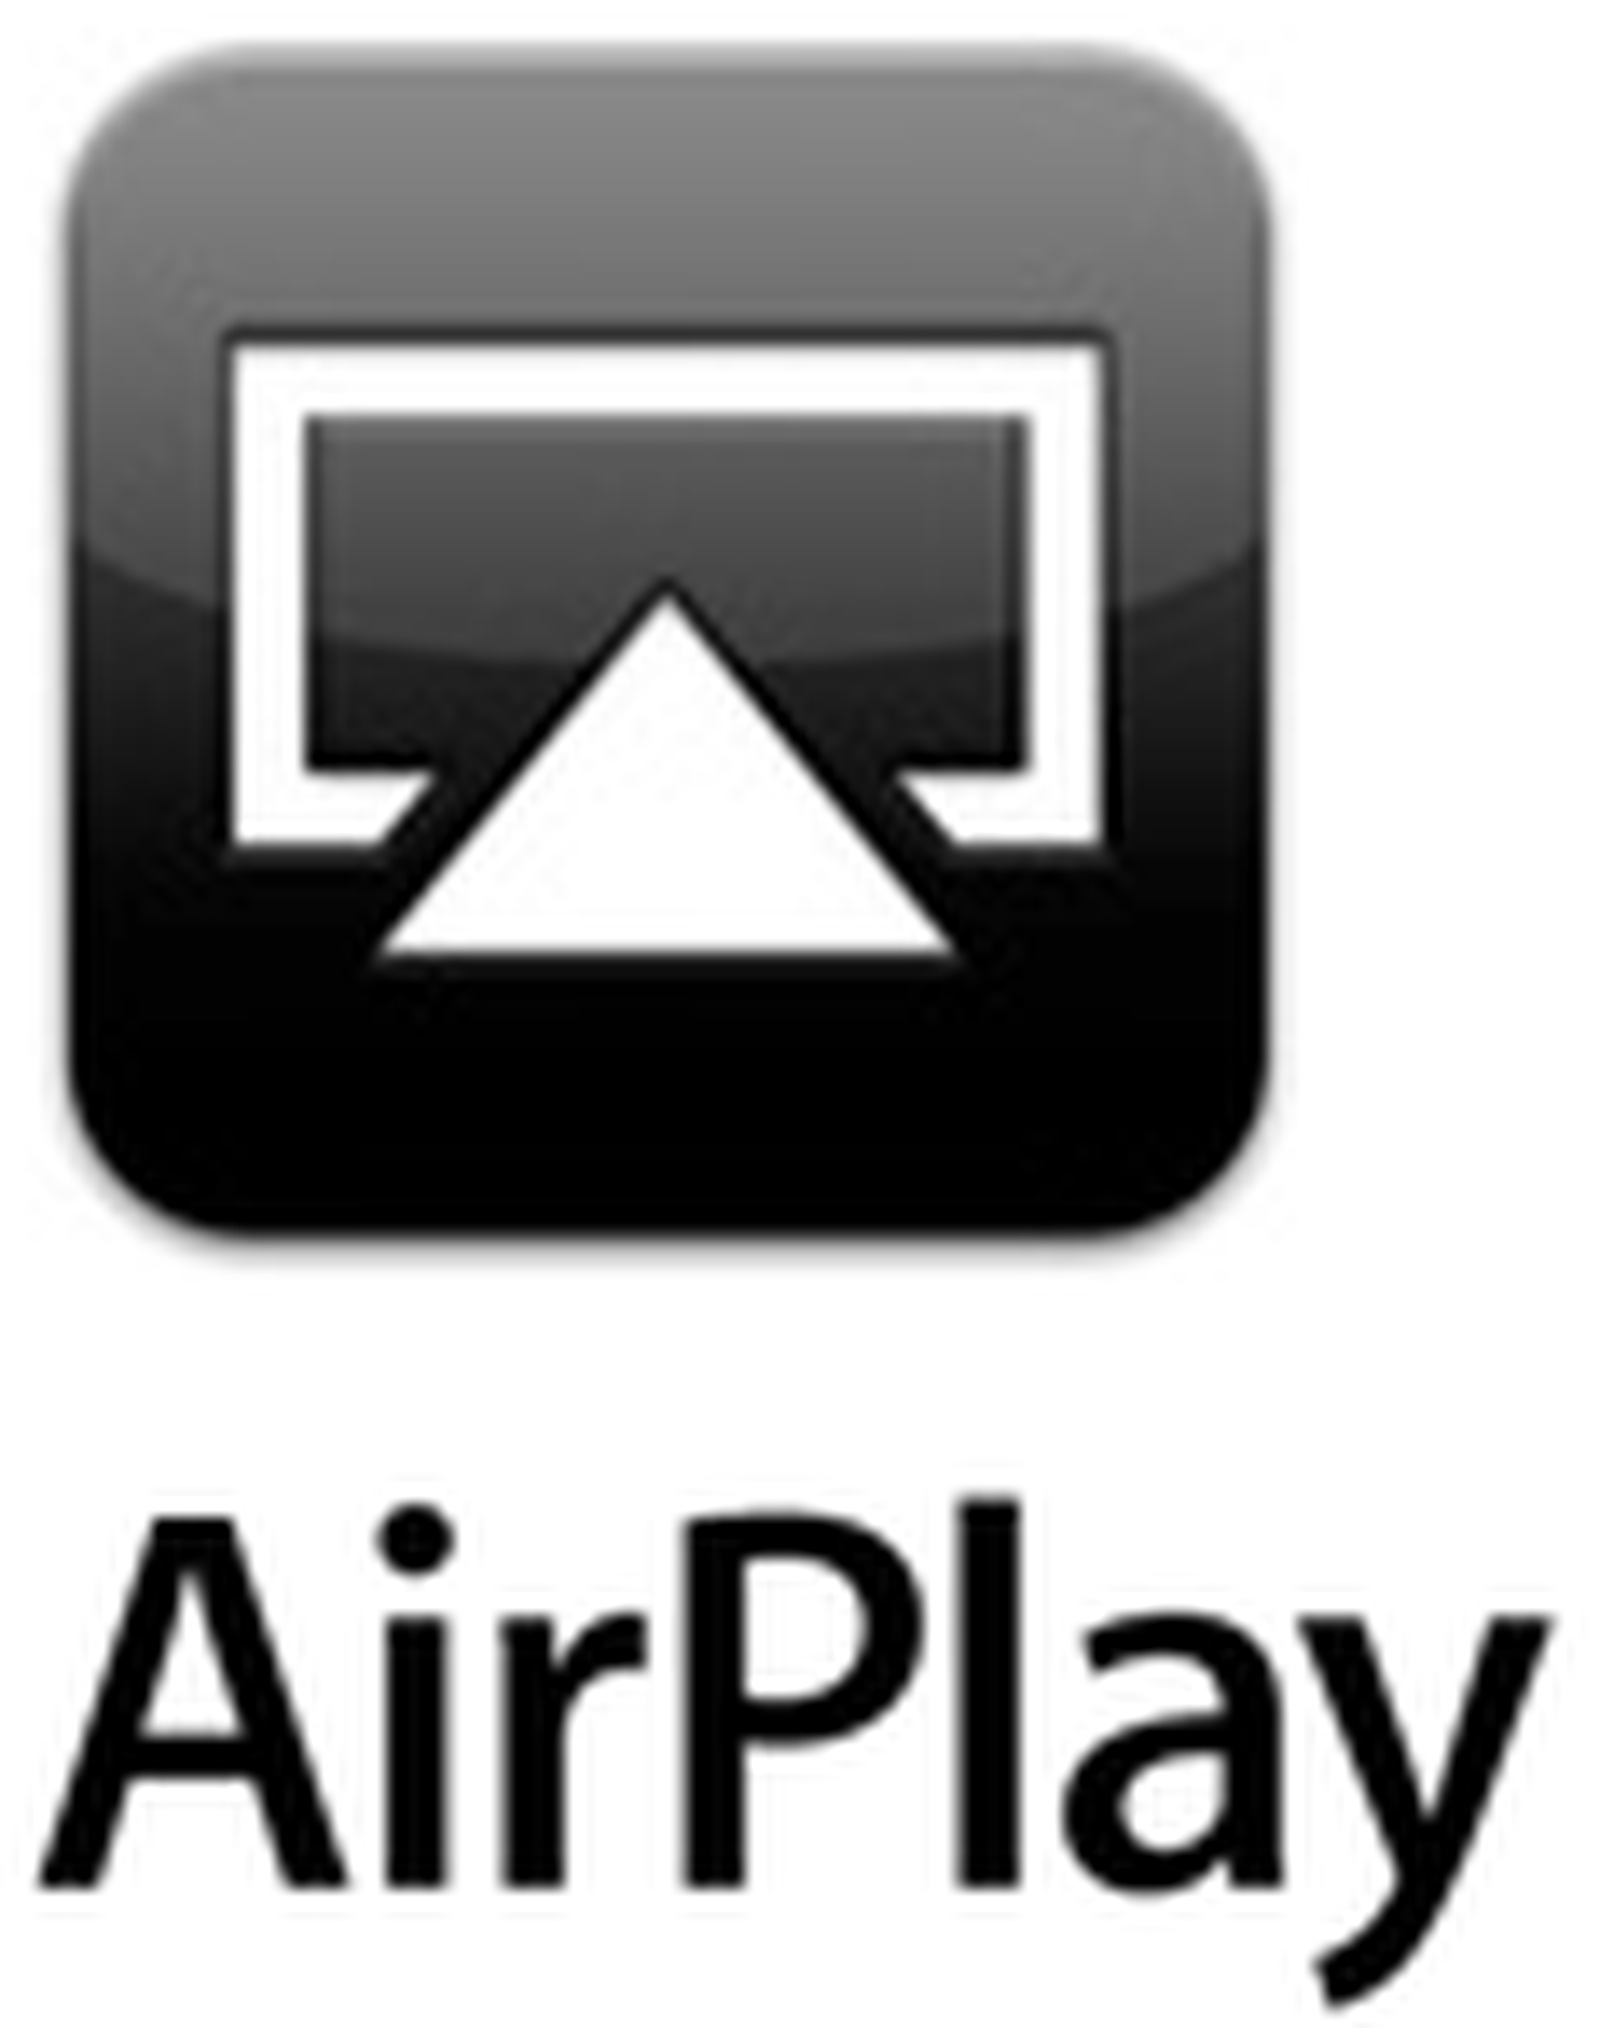 apple airplay logo